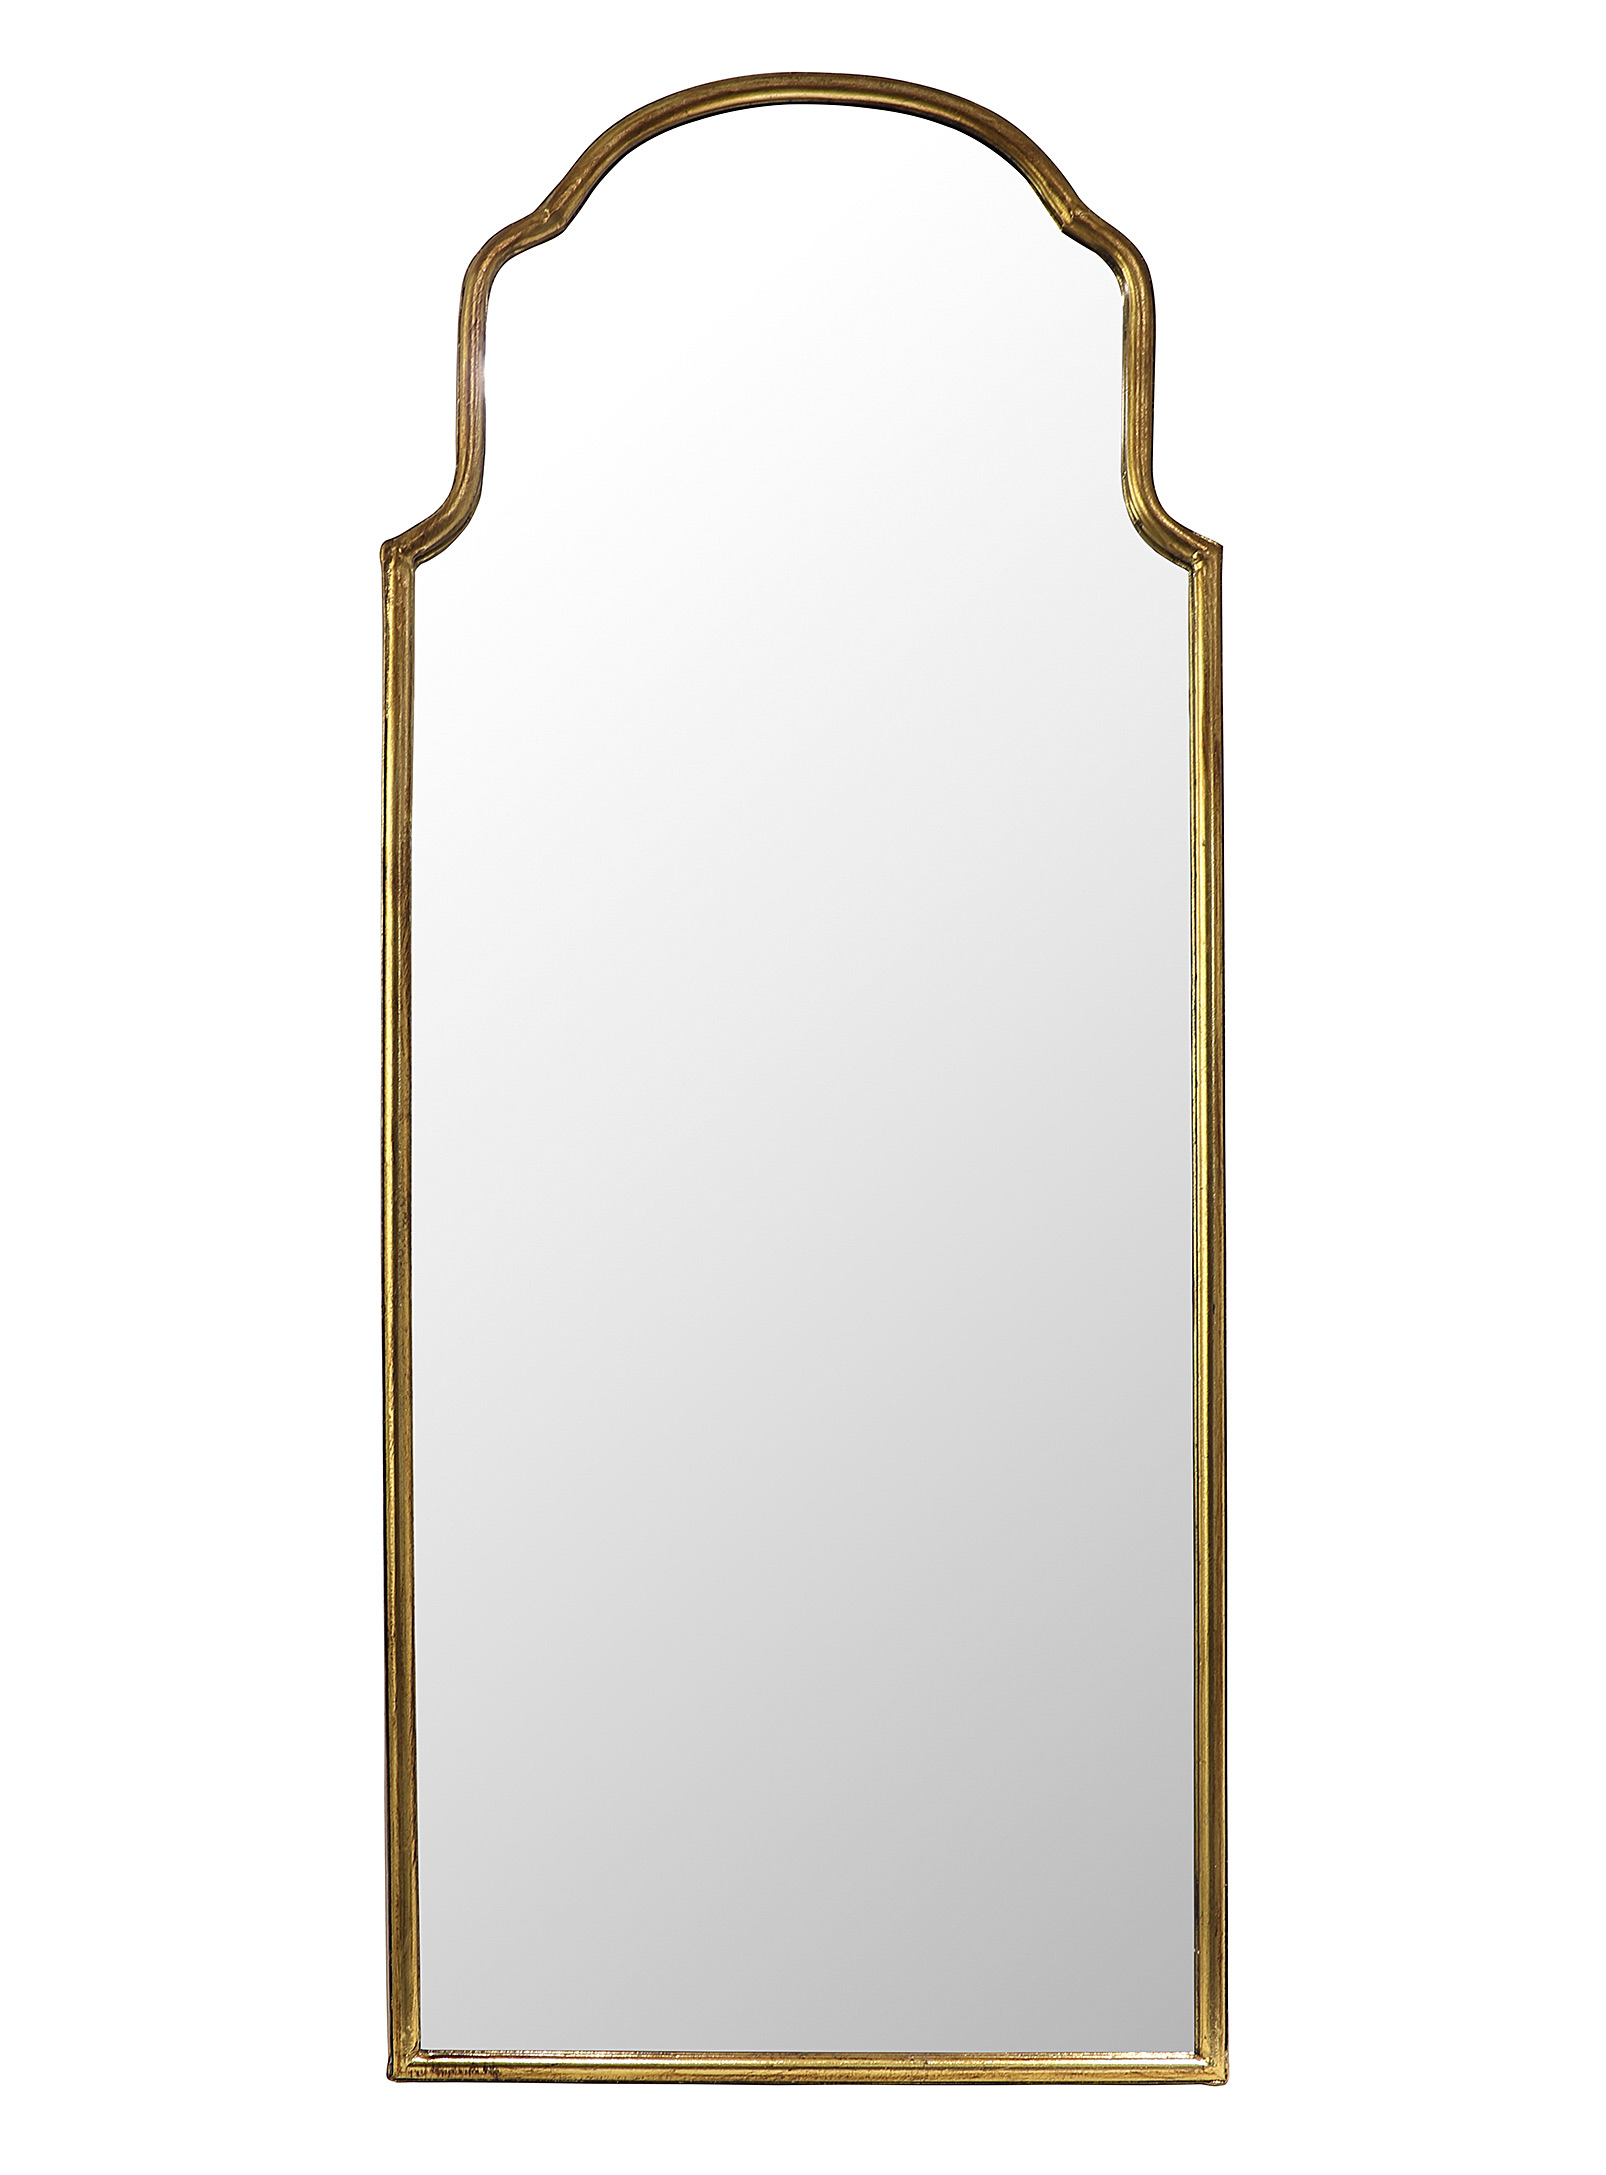 Simons Maison - Large vintage silhouette mirror